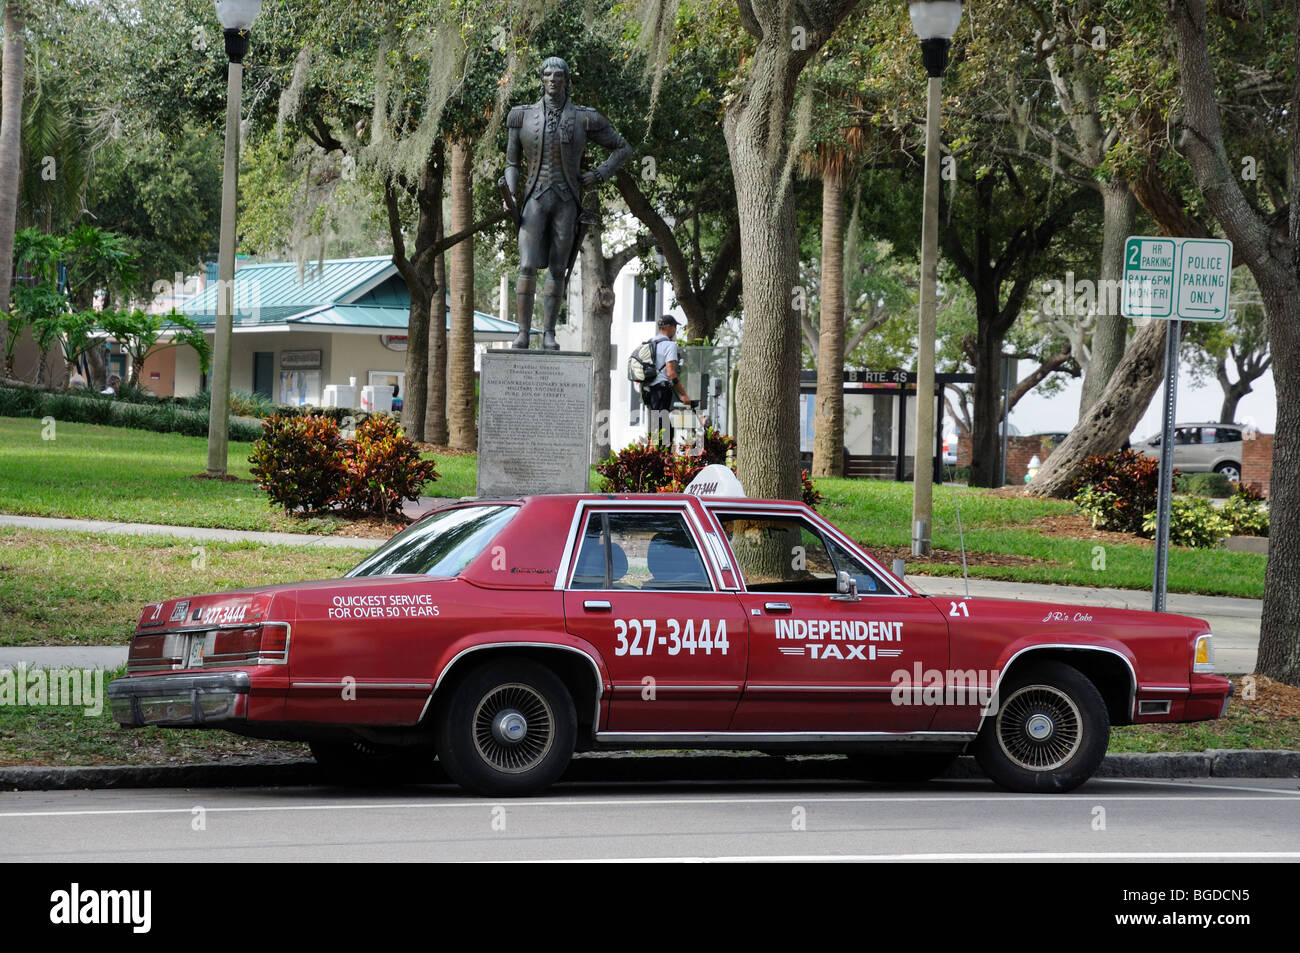 Taxi in St. Petersburg, Florida USA Stockfoto